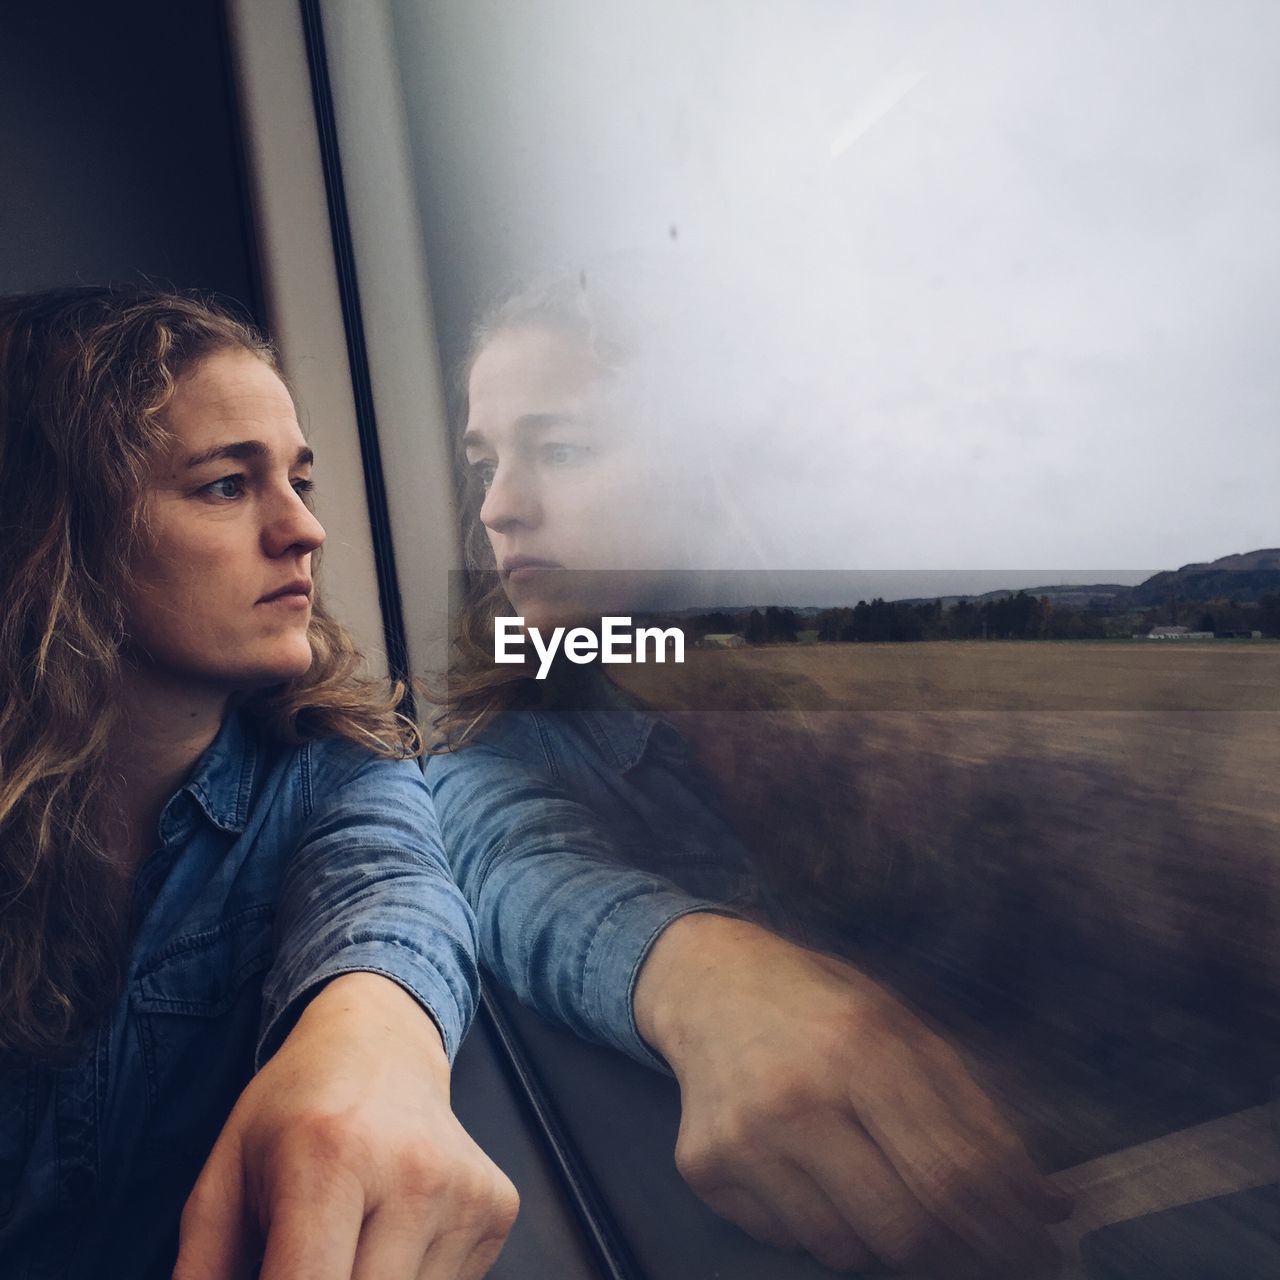 Woman looking through window on train